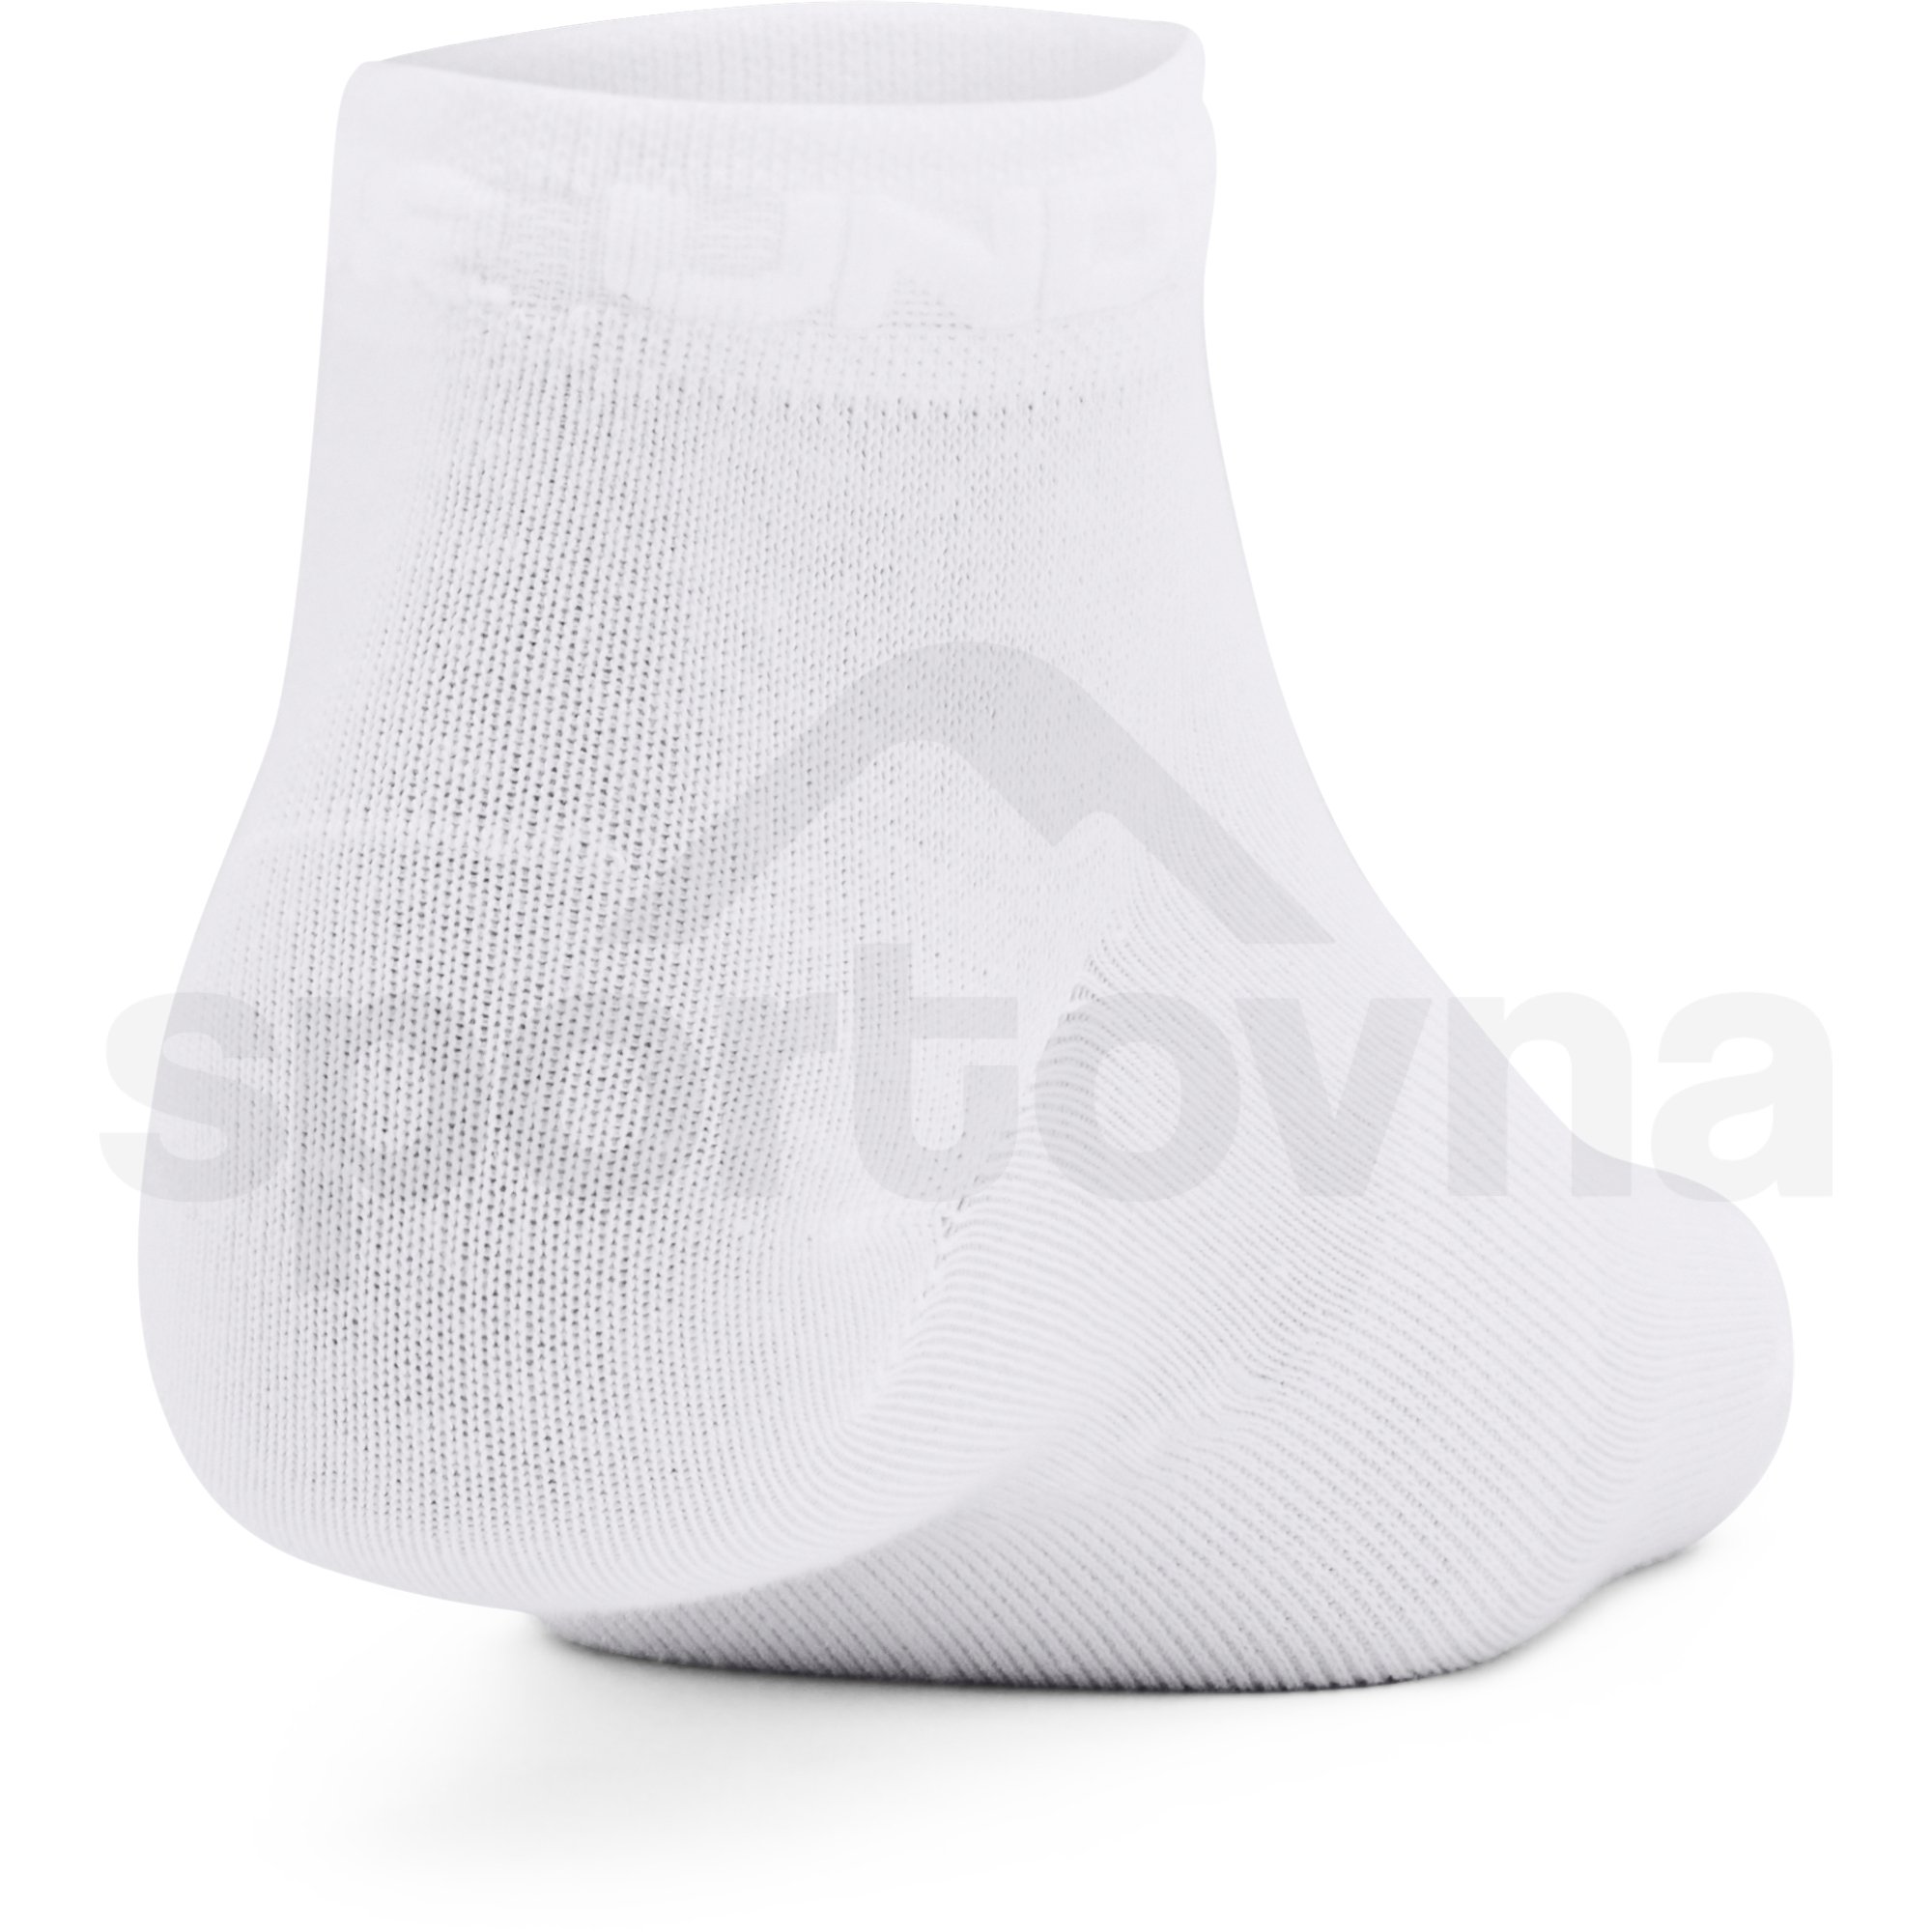 Ponožky Under Armour Essential Low Cut 3Pk - bílá